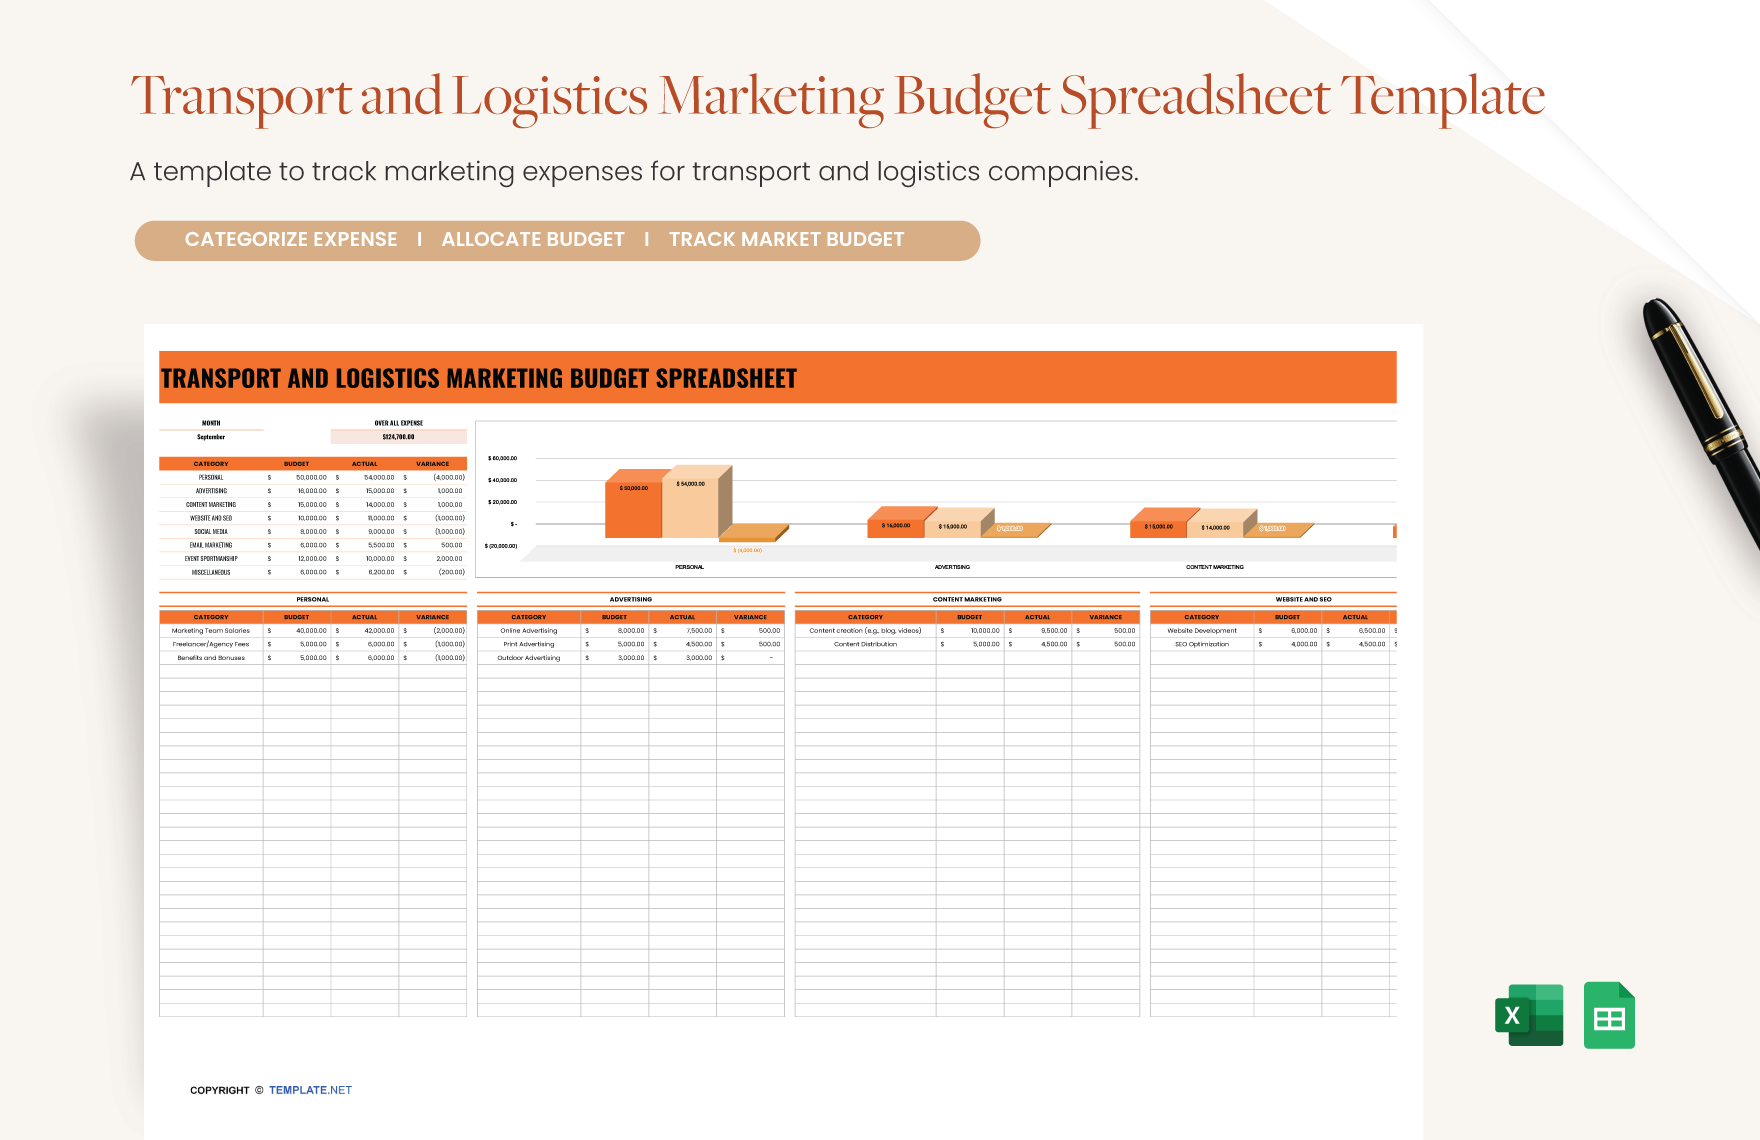 Transport and Logistics Marketing Budget Spreadsheet Template